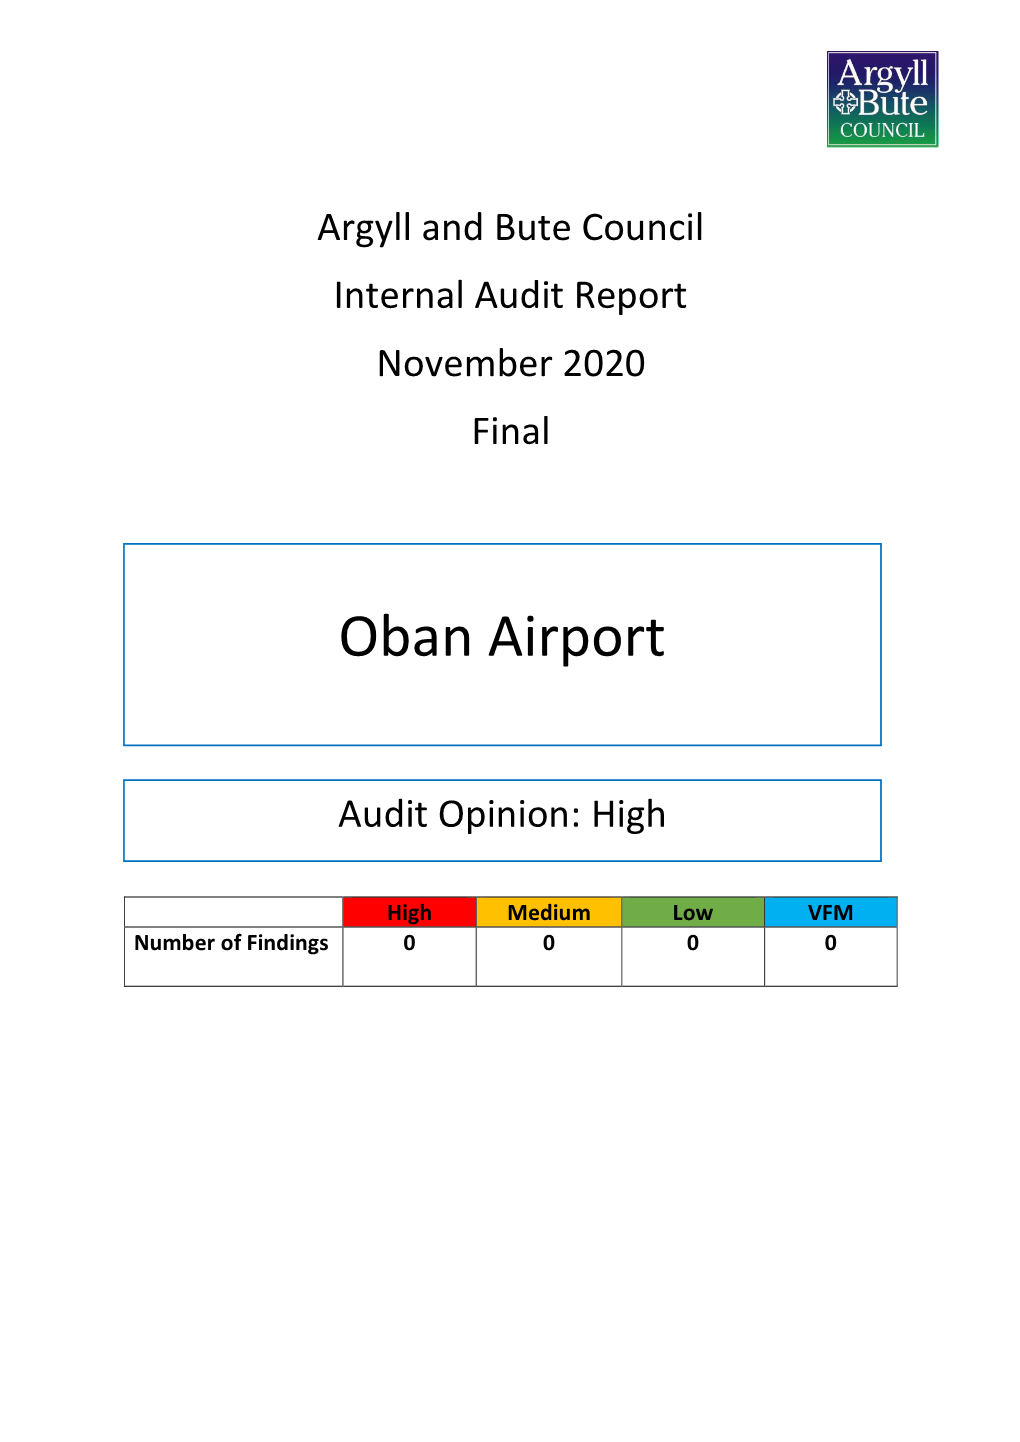 Oban Airport